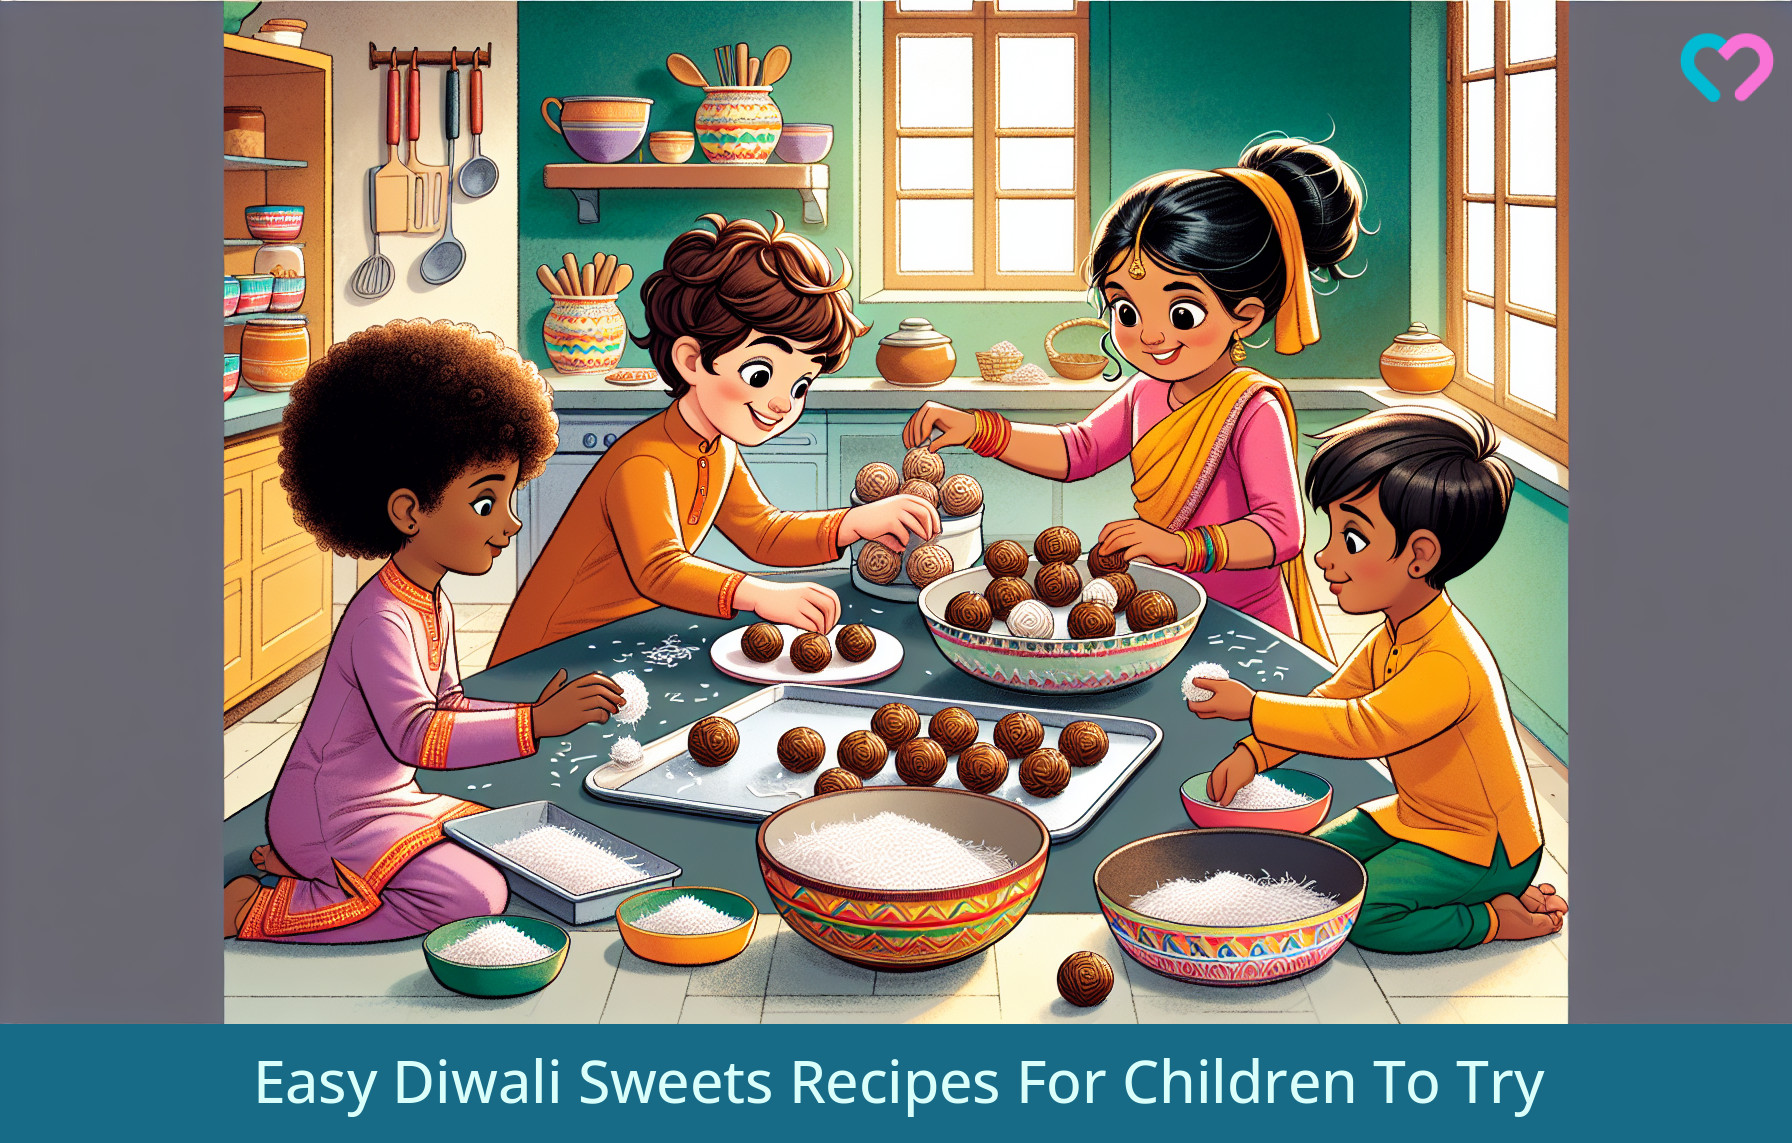 Diwali Sweet Recipes For Children_illustration